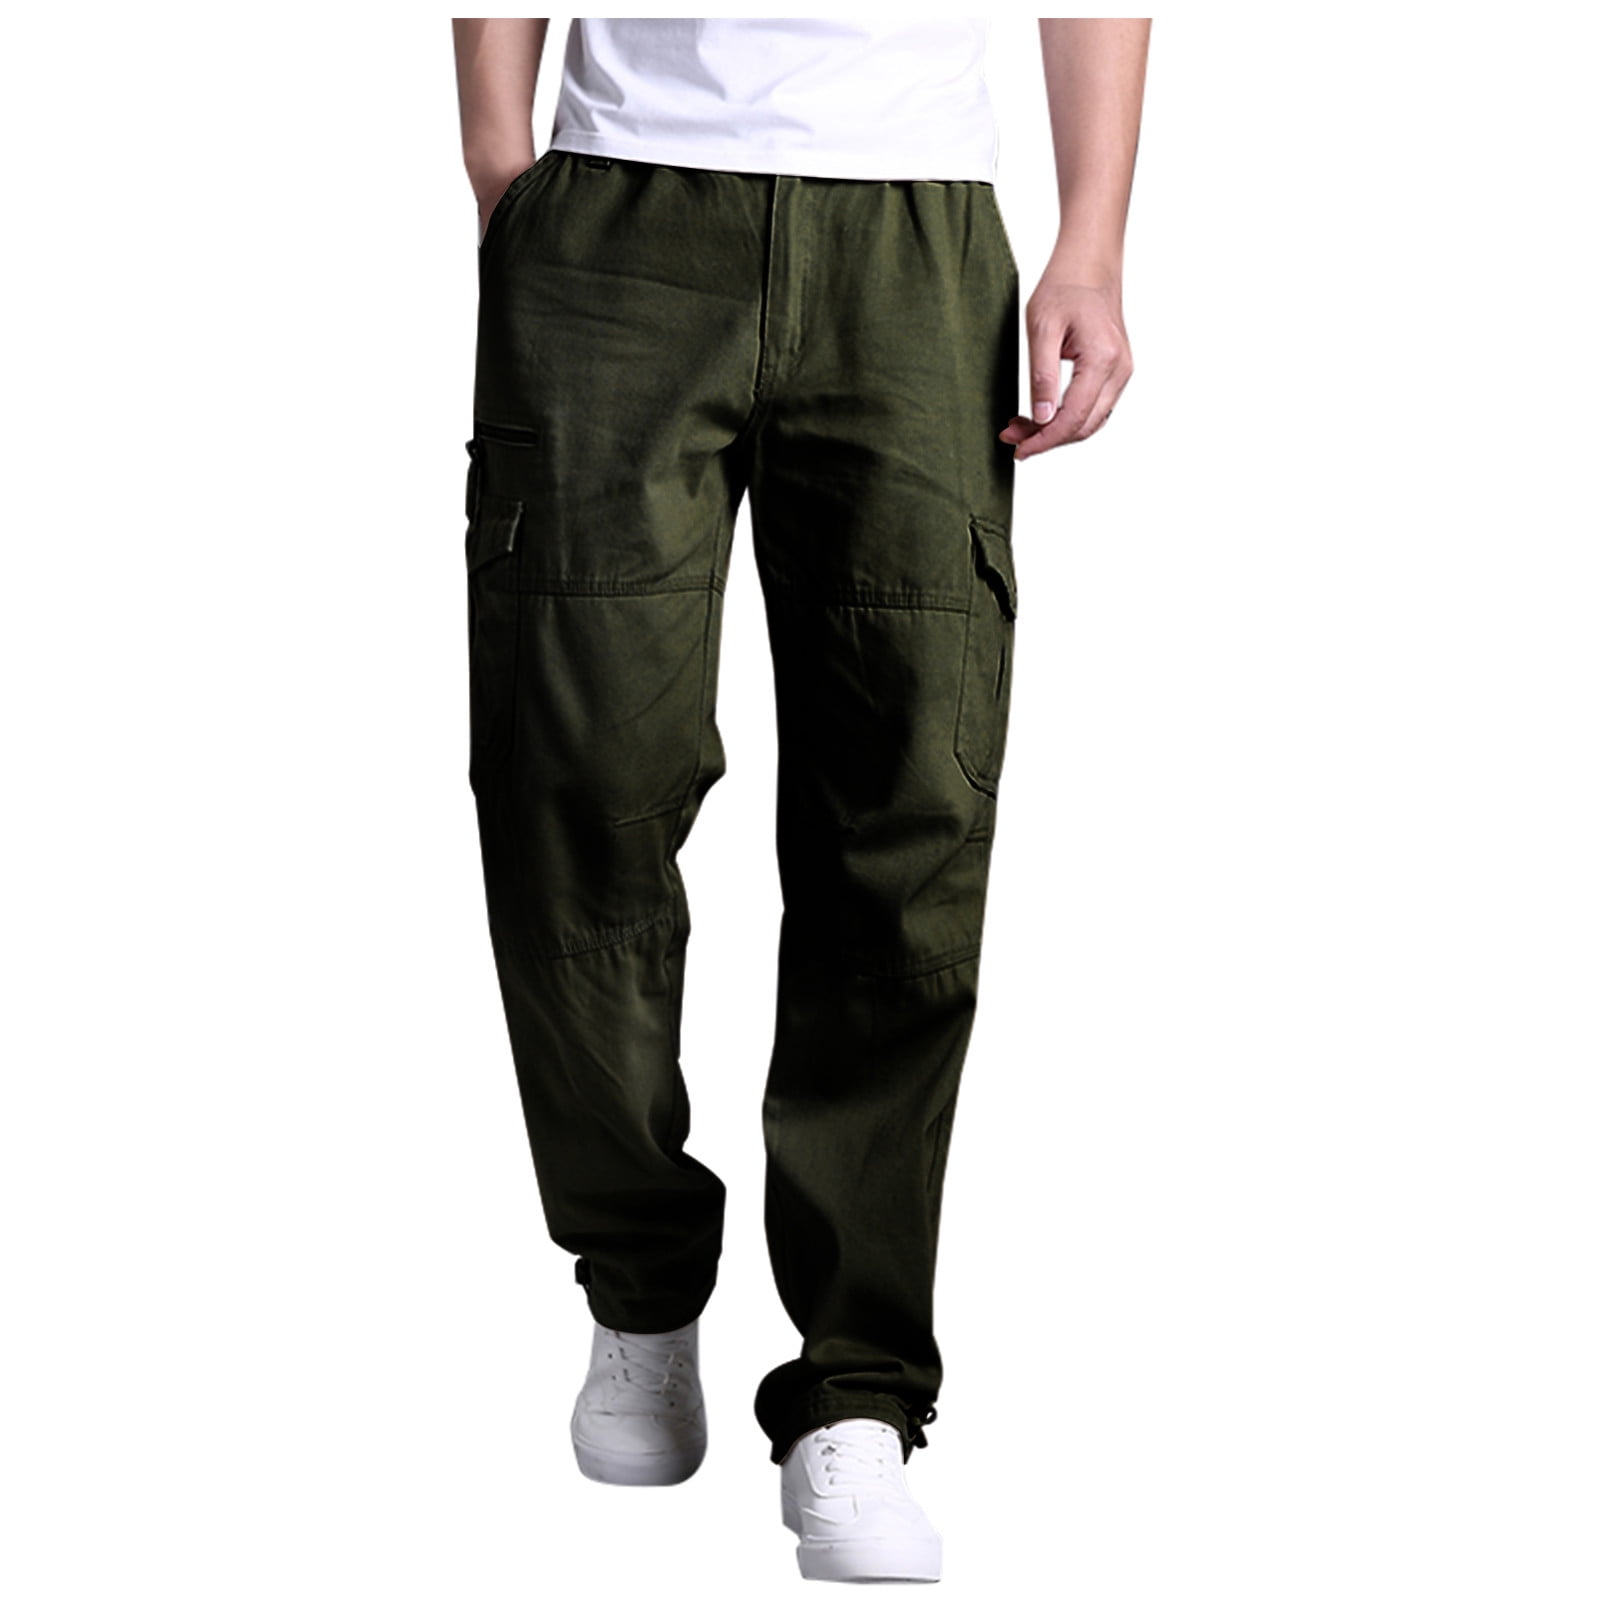 Juebong Men's Khaki Cargo Pants Classic Loose Fit Trousers Outdoor Casual  Work Pants Sweatpants with Multi-pocket, 4X-Large, Khaki 